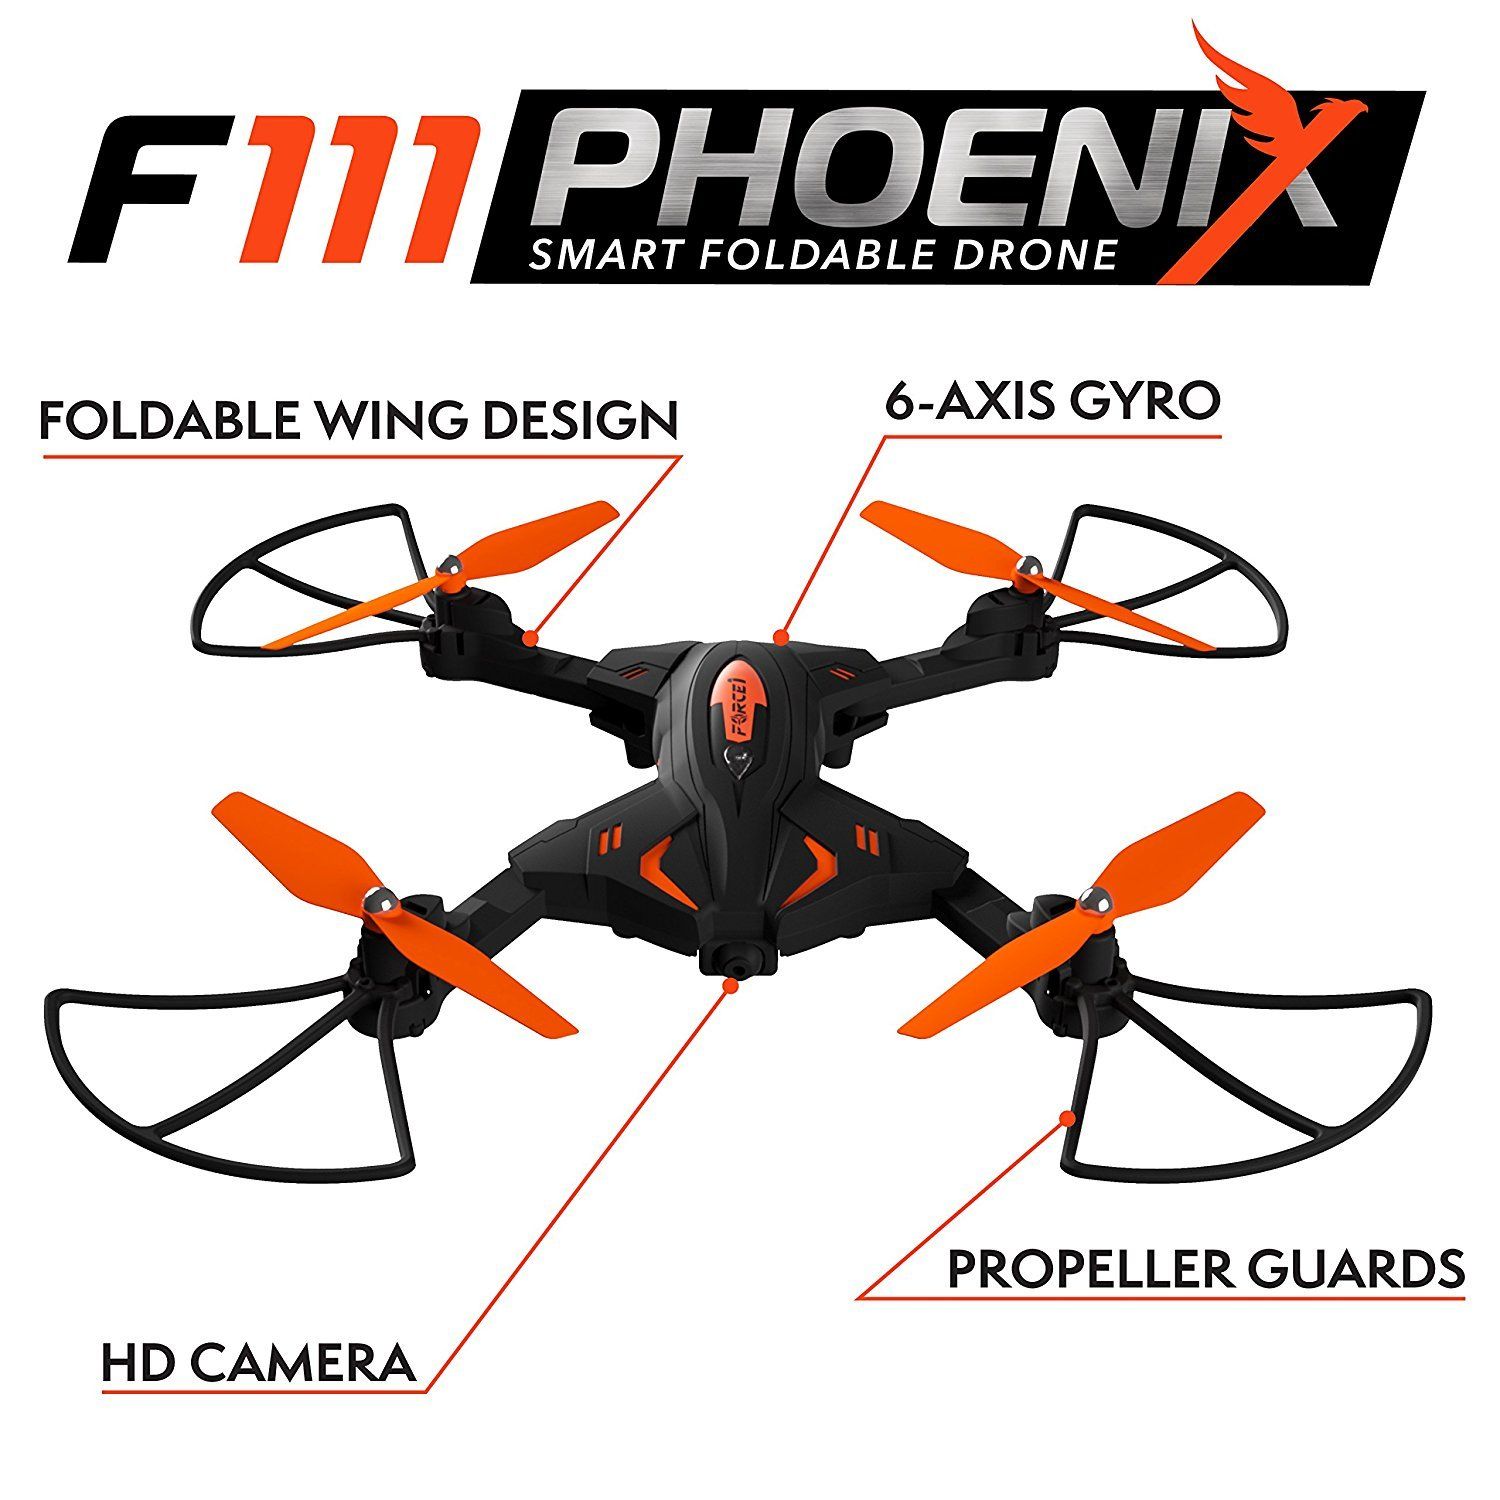 F111 Phoenix Foldable Wi-Fi FPV Live Video Drone